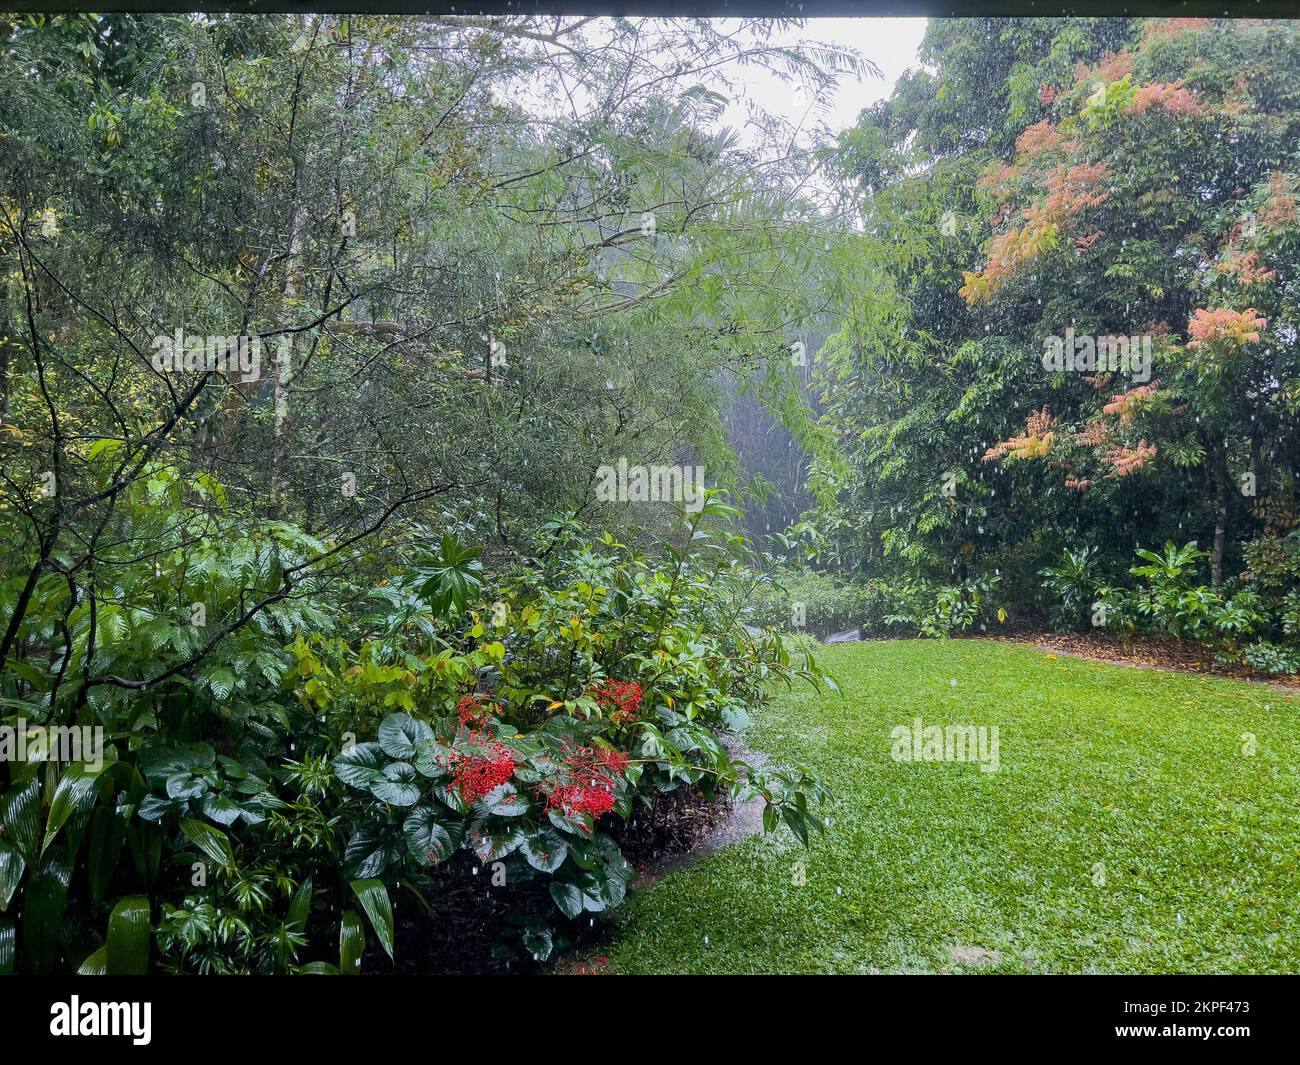 Raining day garden in the backyard Stock Photo